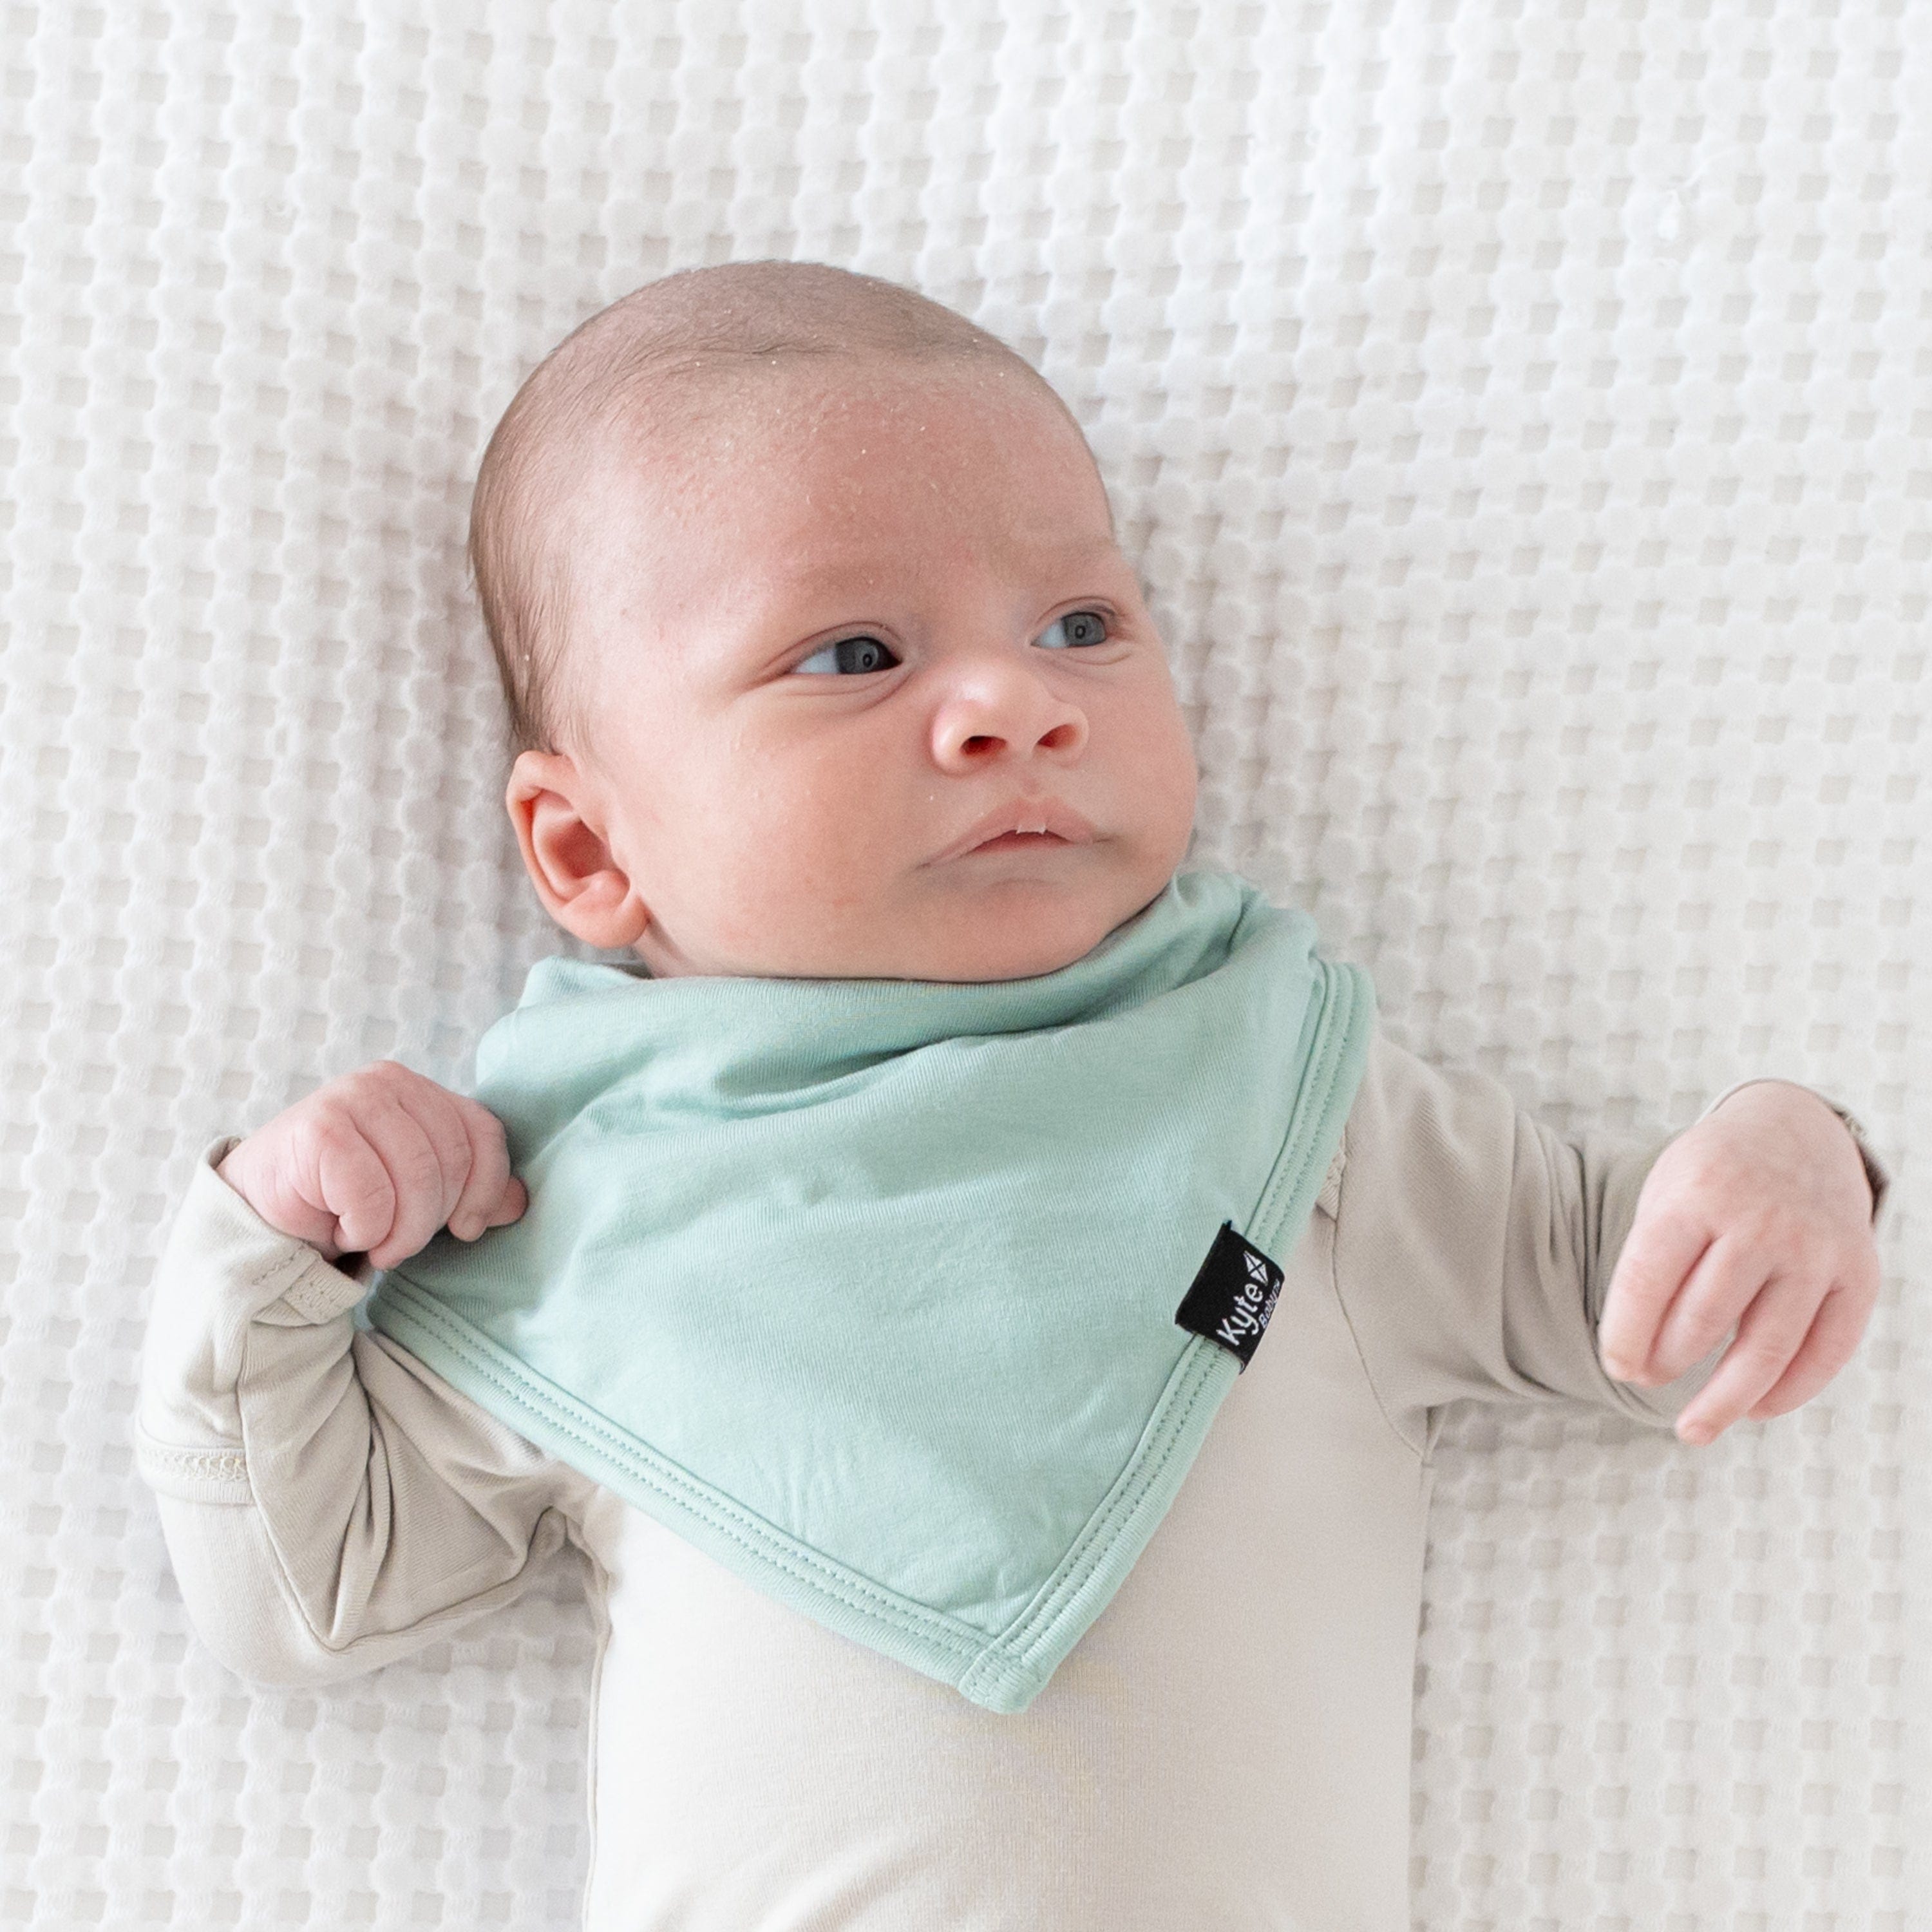 Infant wearing Kyte Baby Bib in Sage green